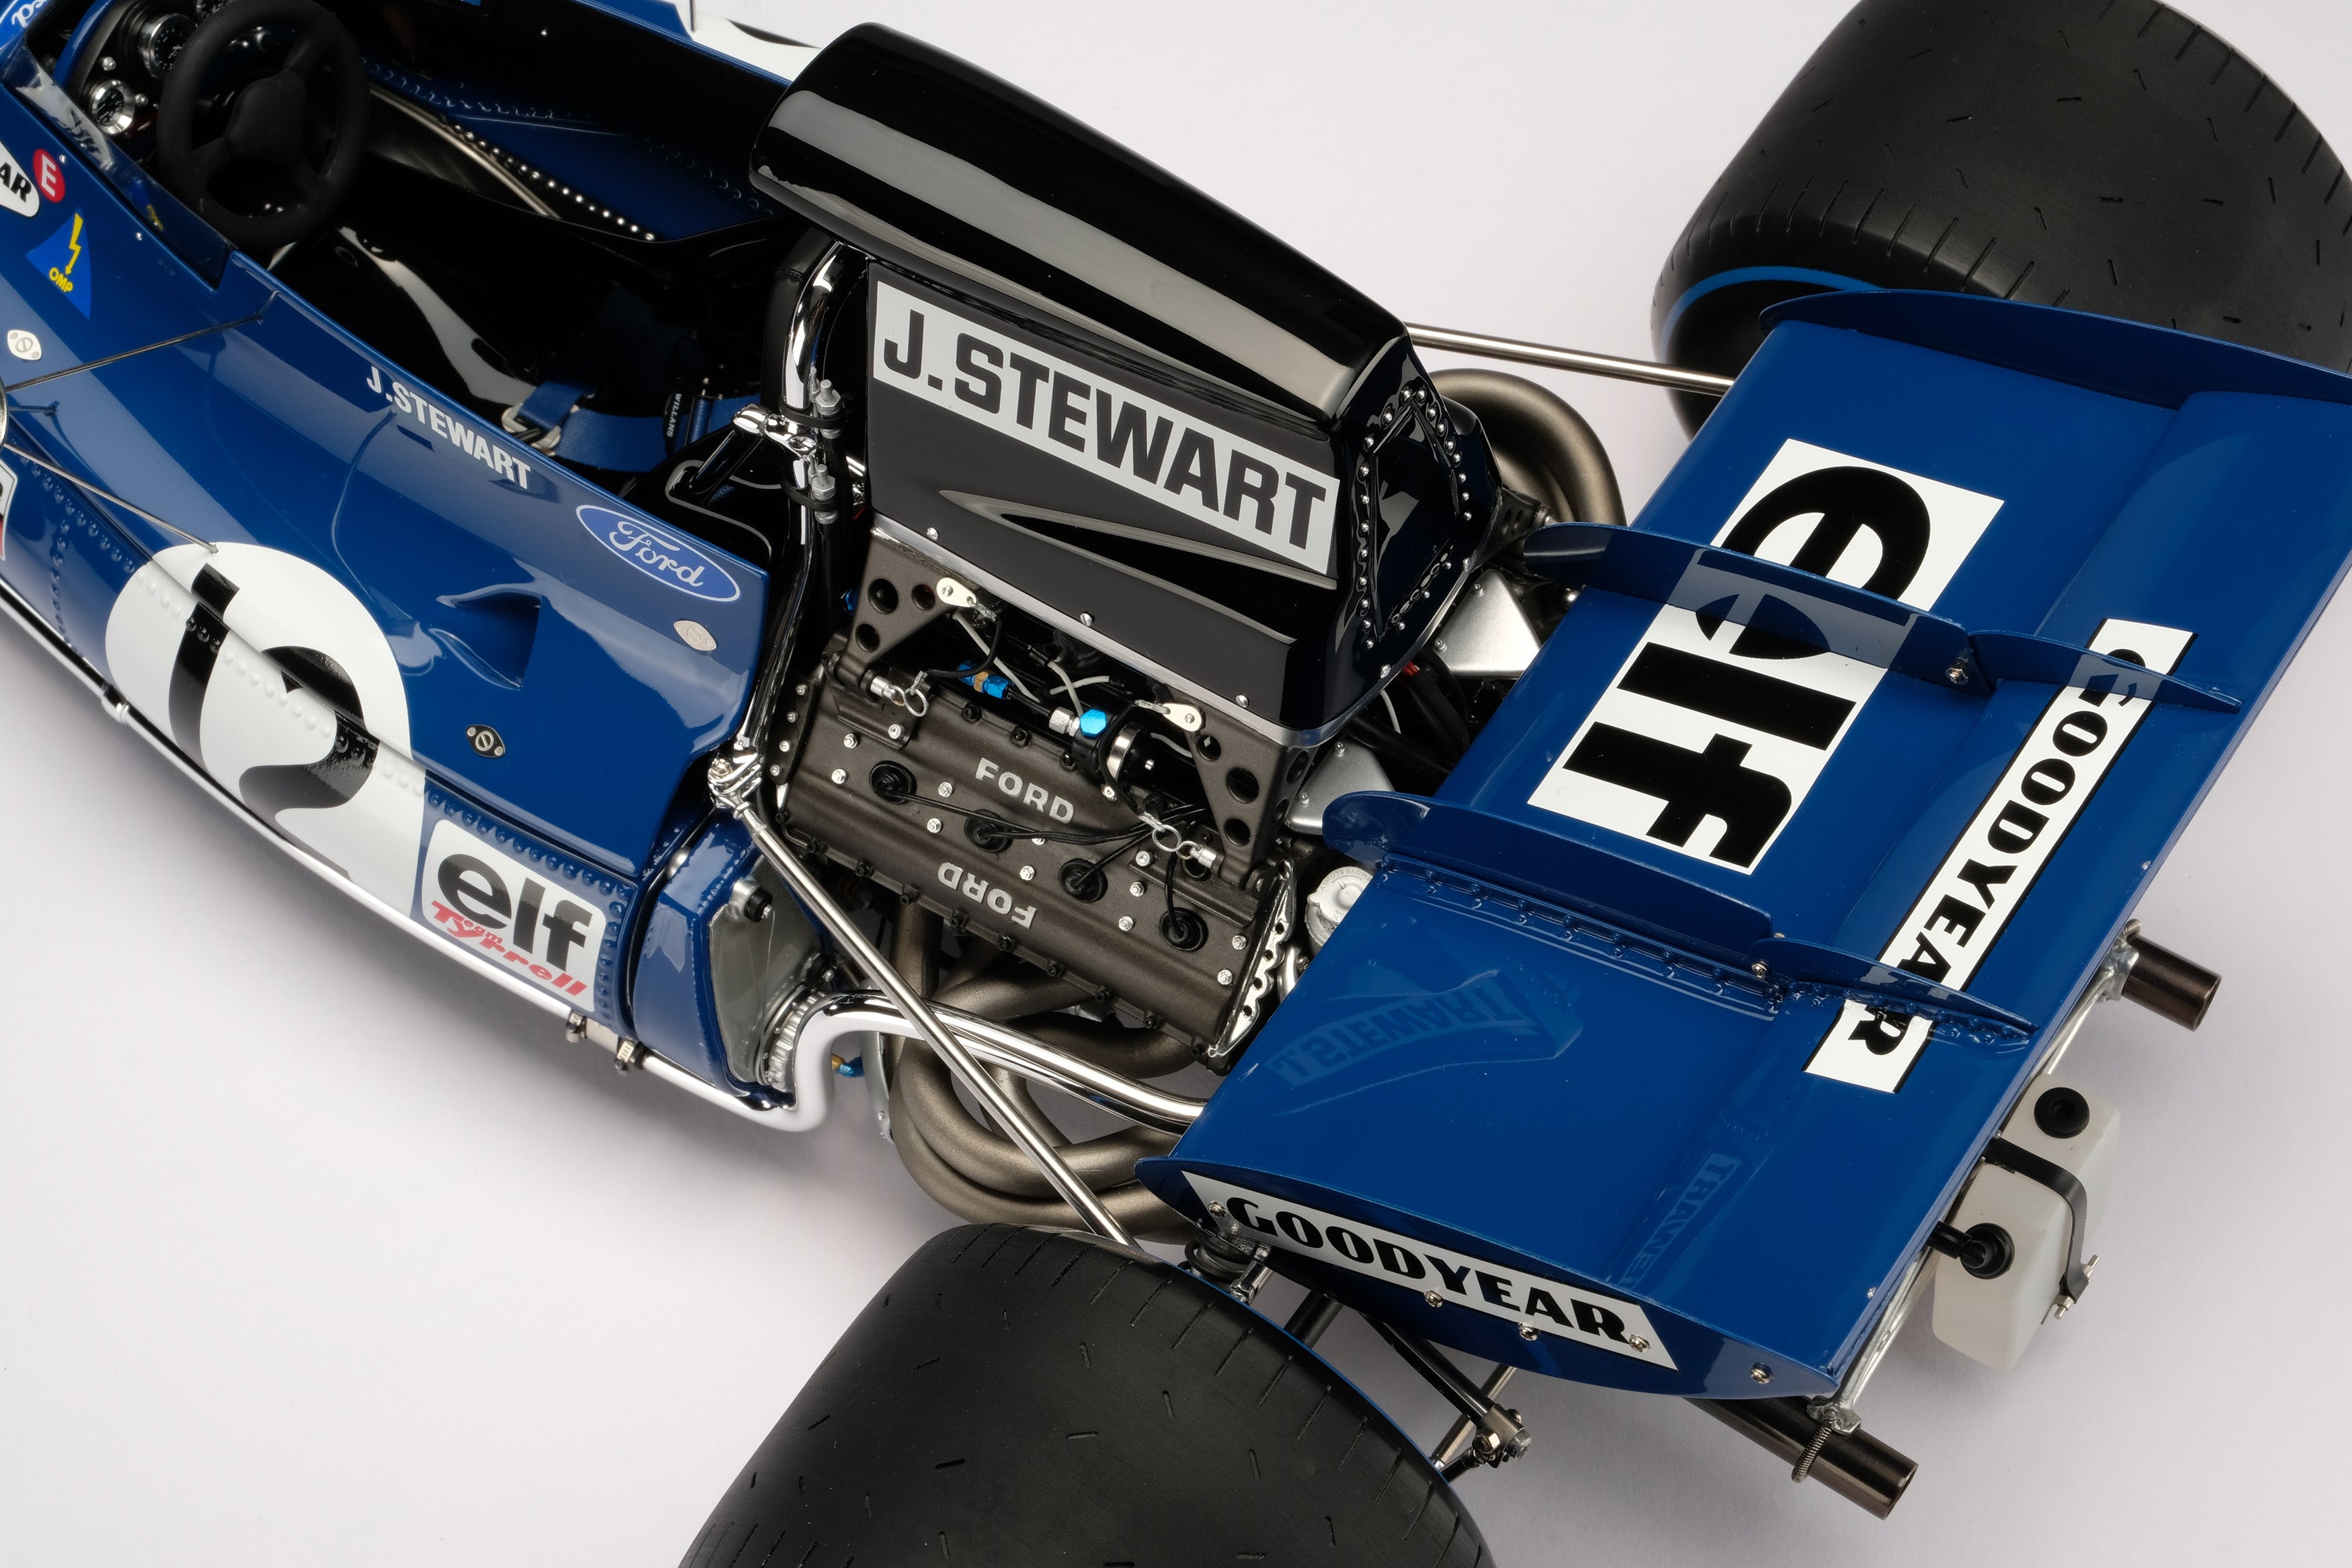 Elf Team Tyrrell 003 - 1971 British Grand Prix – Amalgam Collection